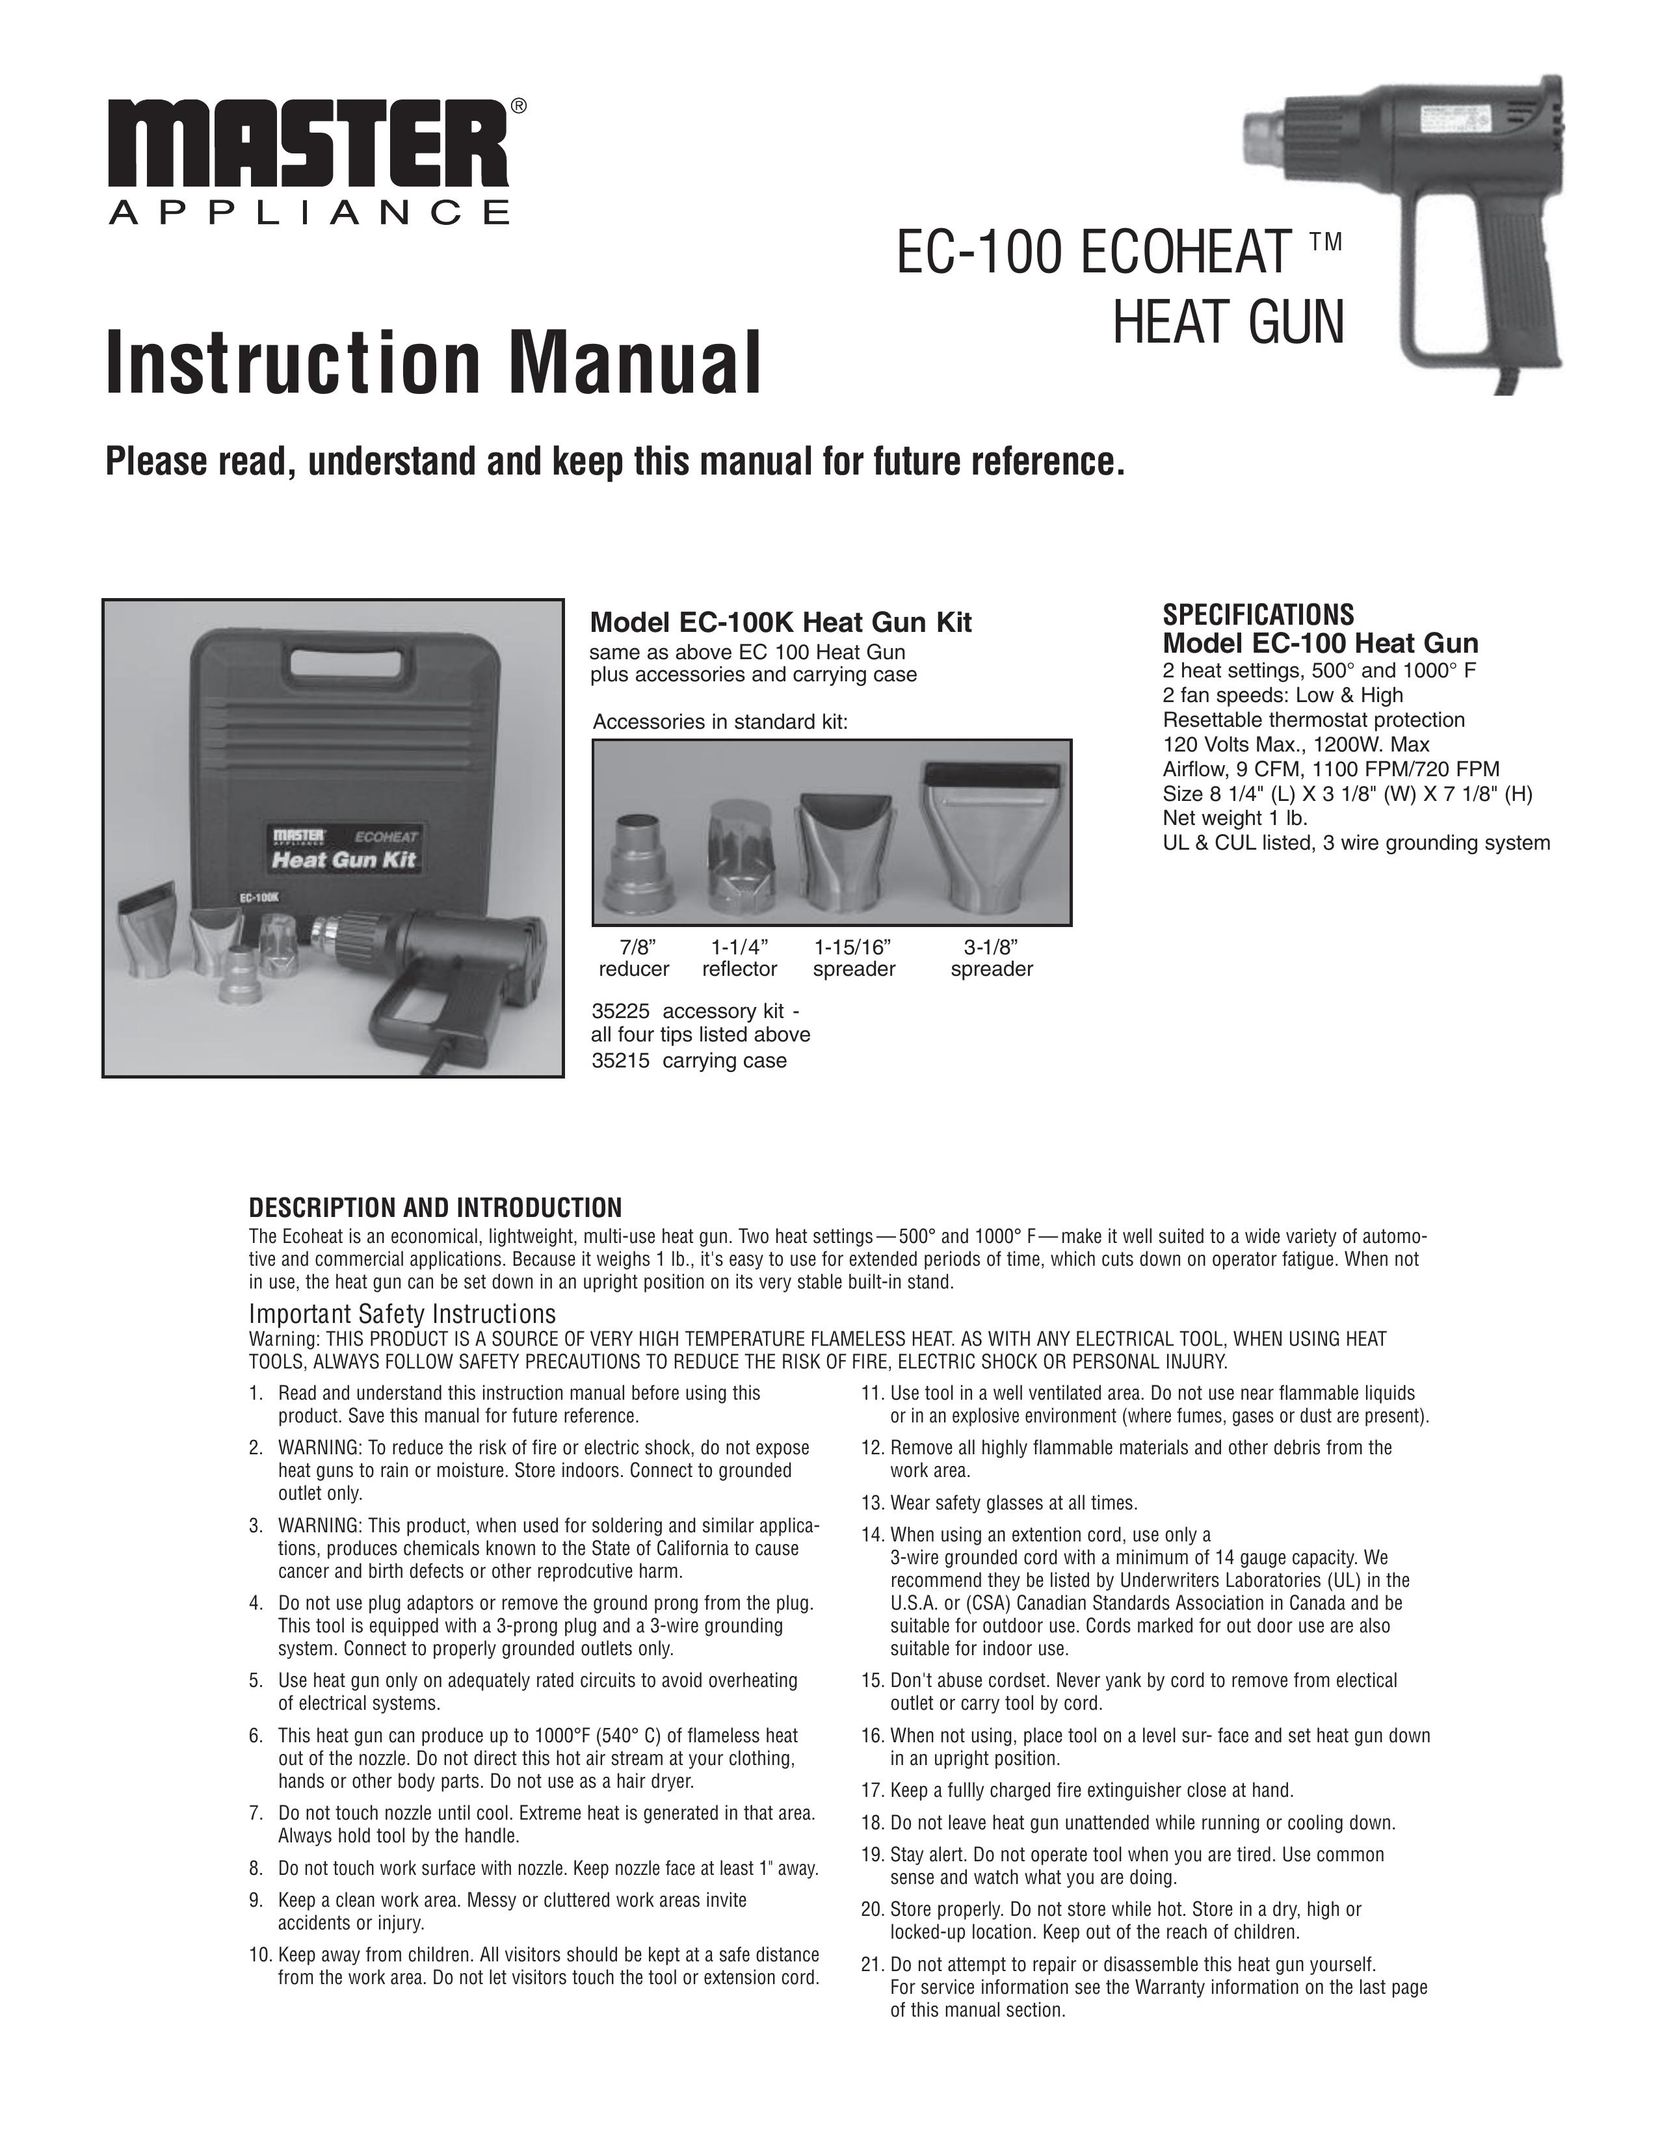 Master Appliance EC 100-K Heat Gun User Manual